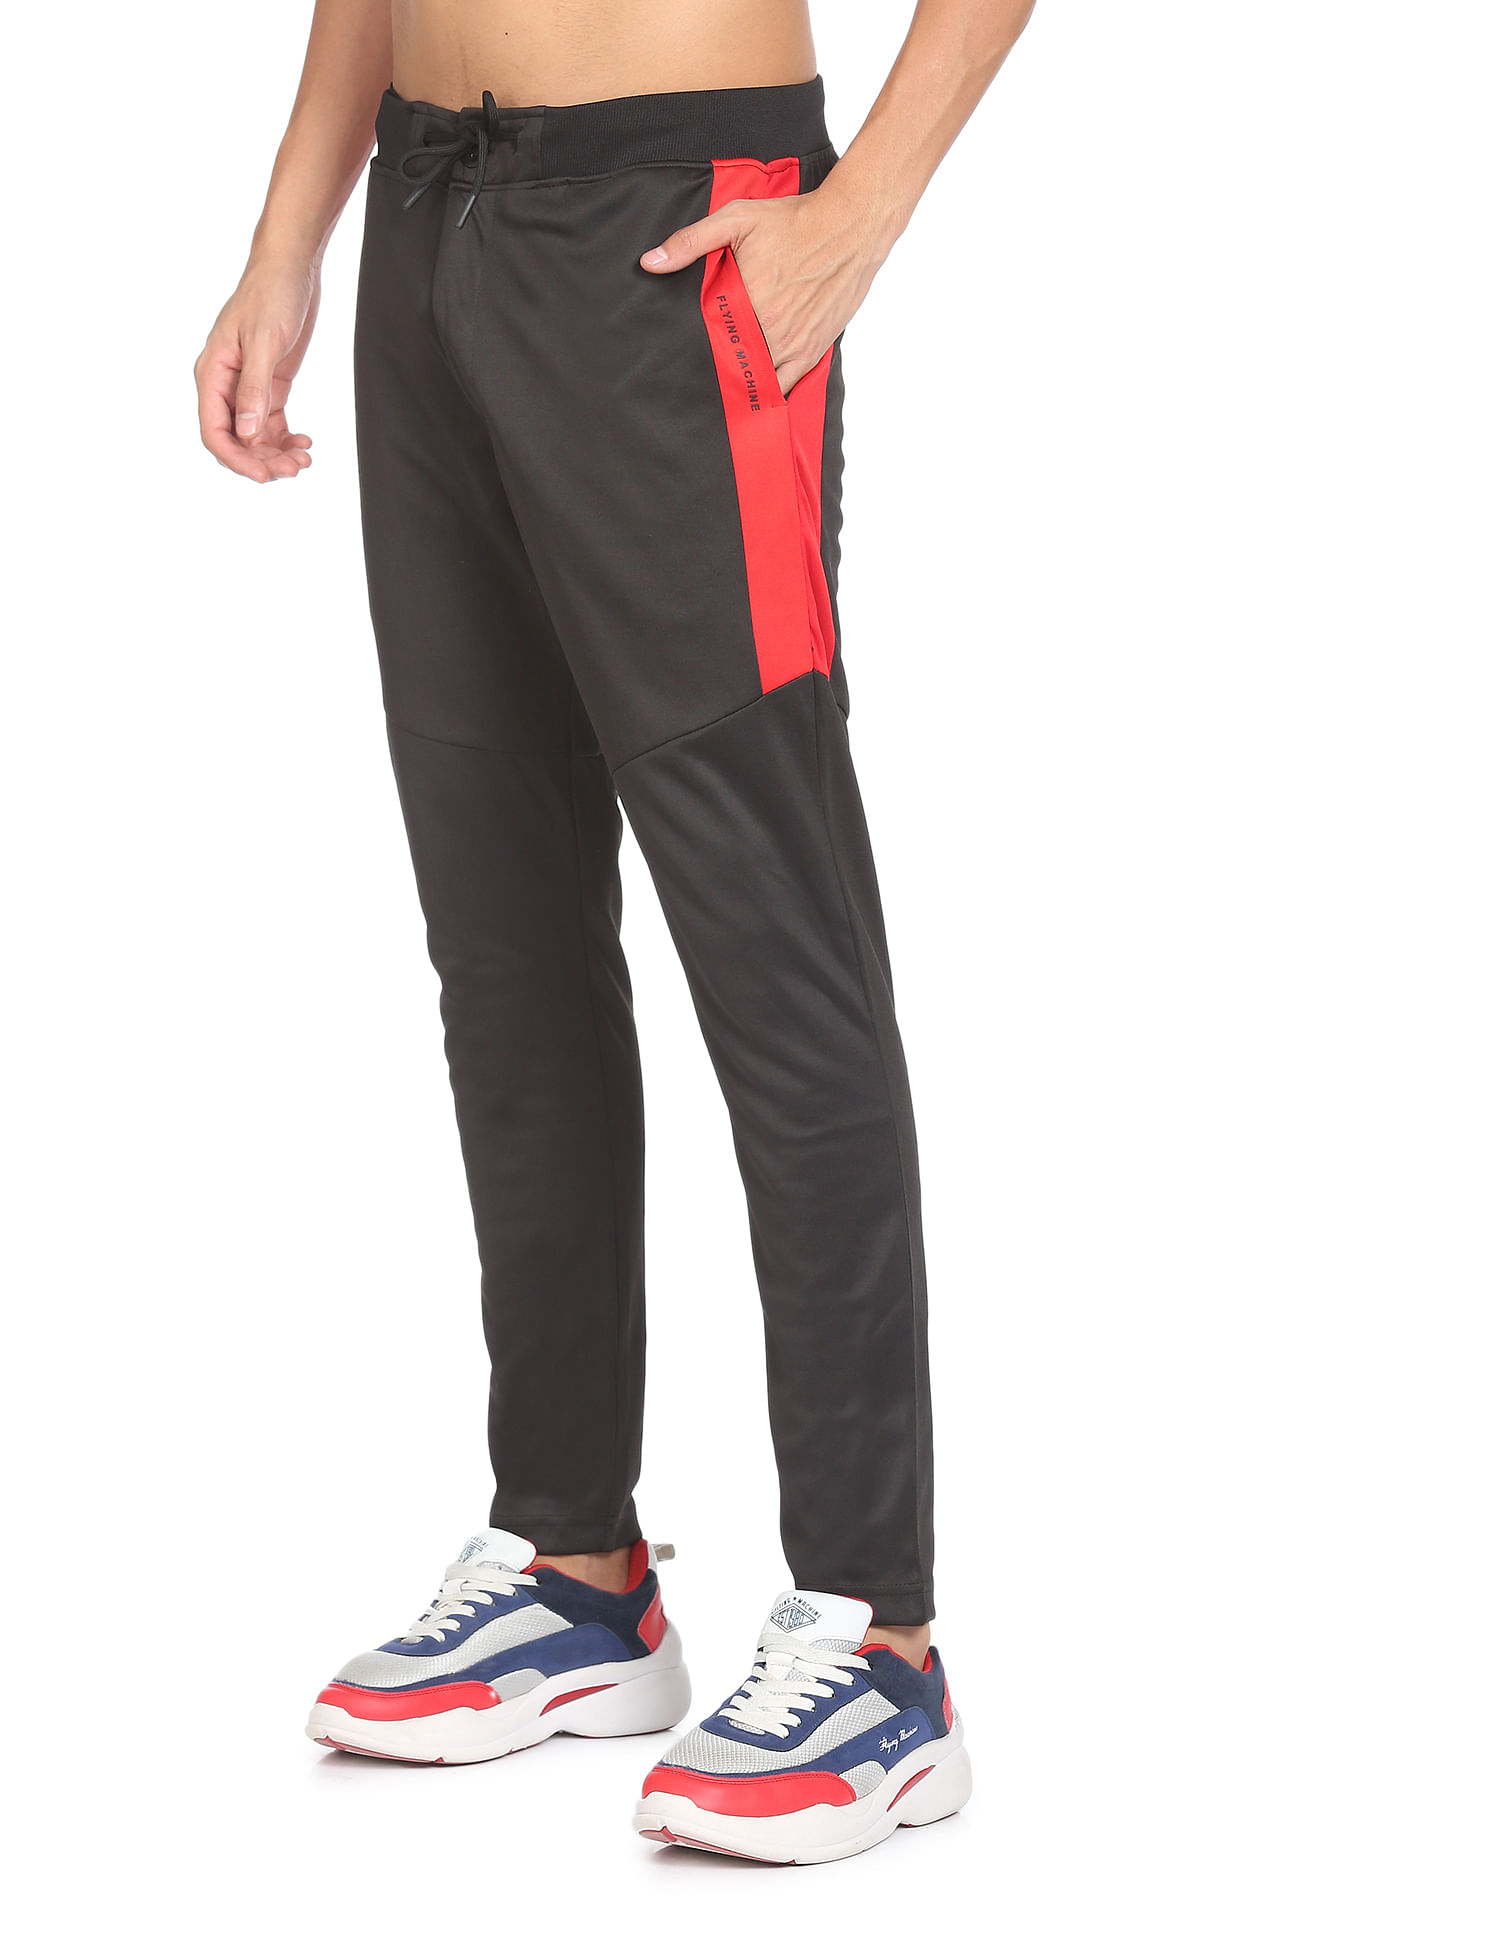 REEBOK Men's Track Pants Activewear Black L Polyester | eBay